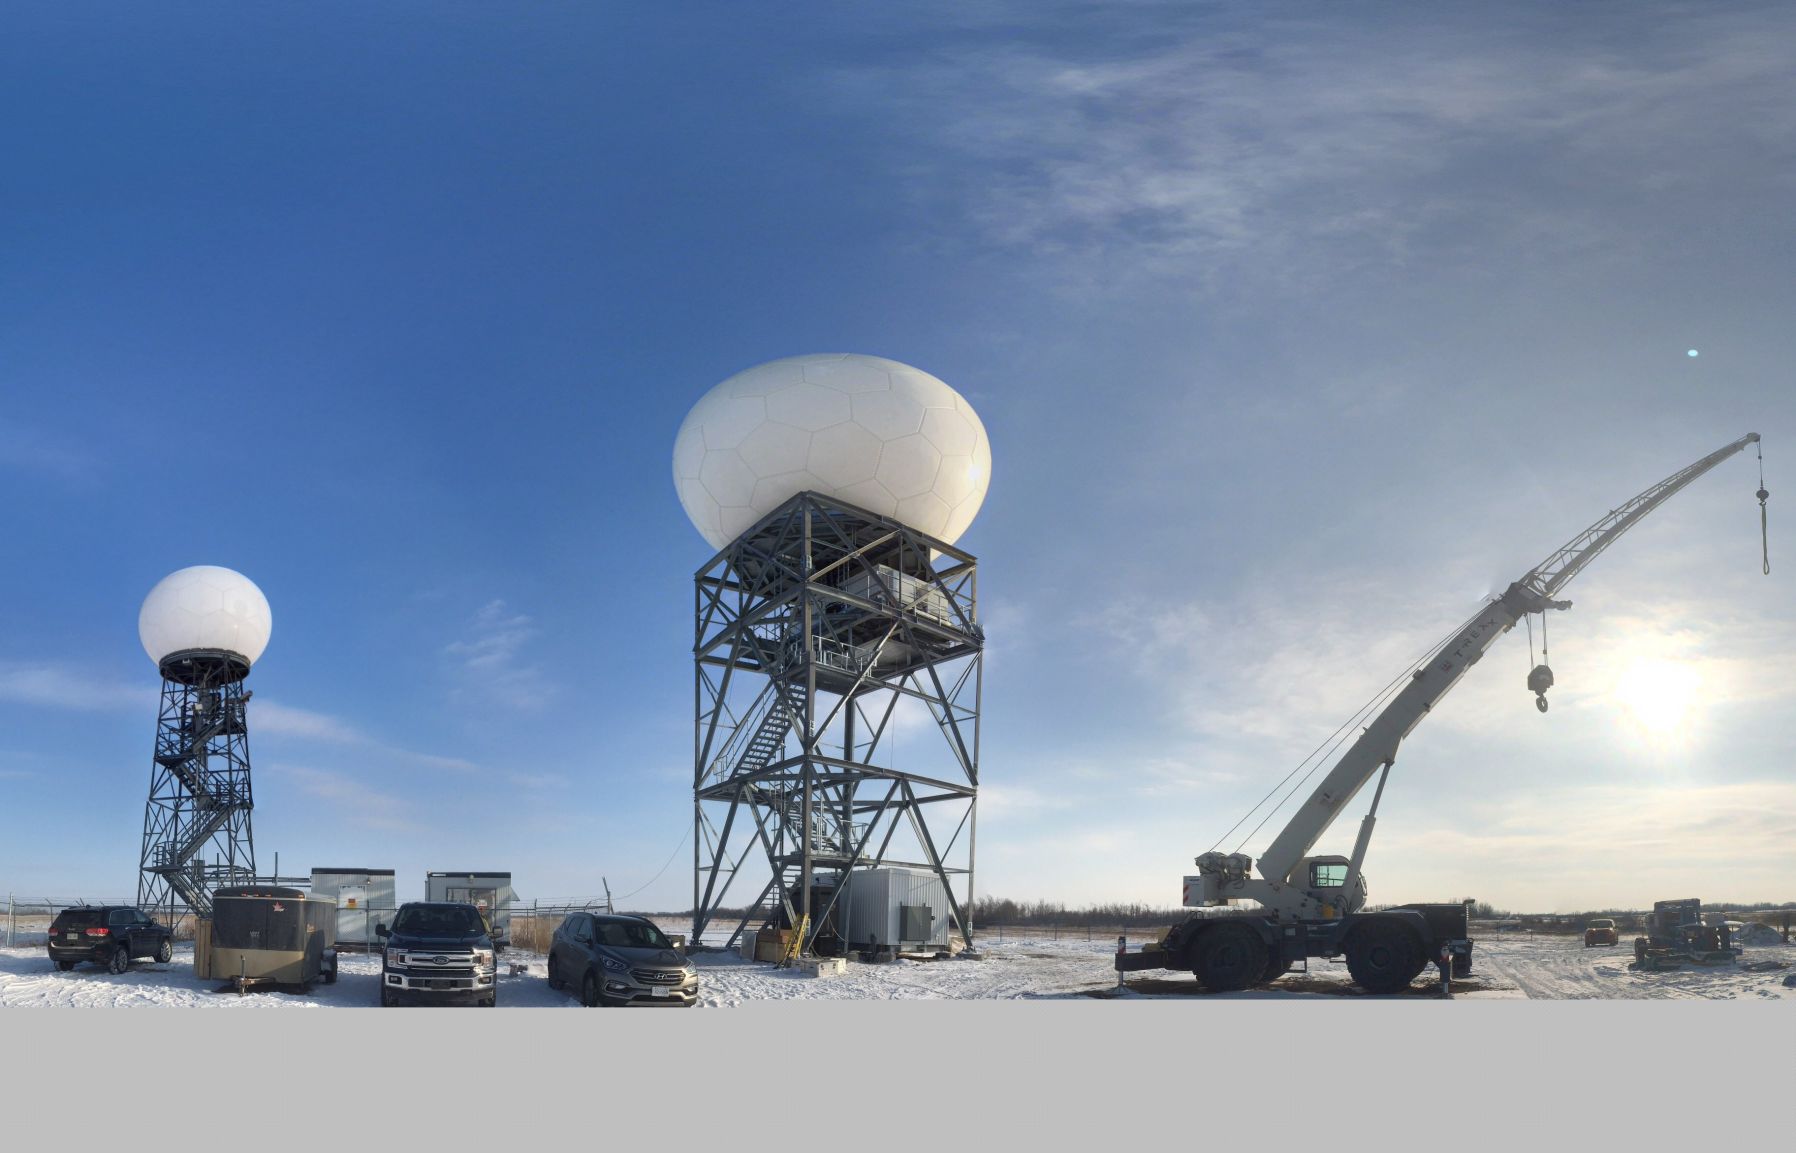 canada weather network radar